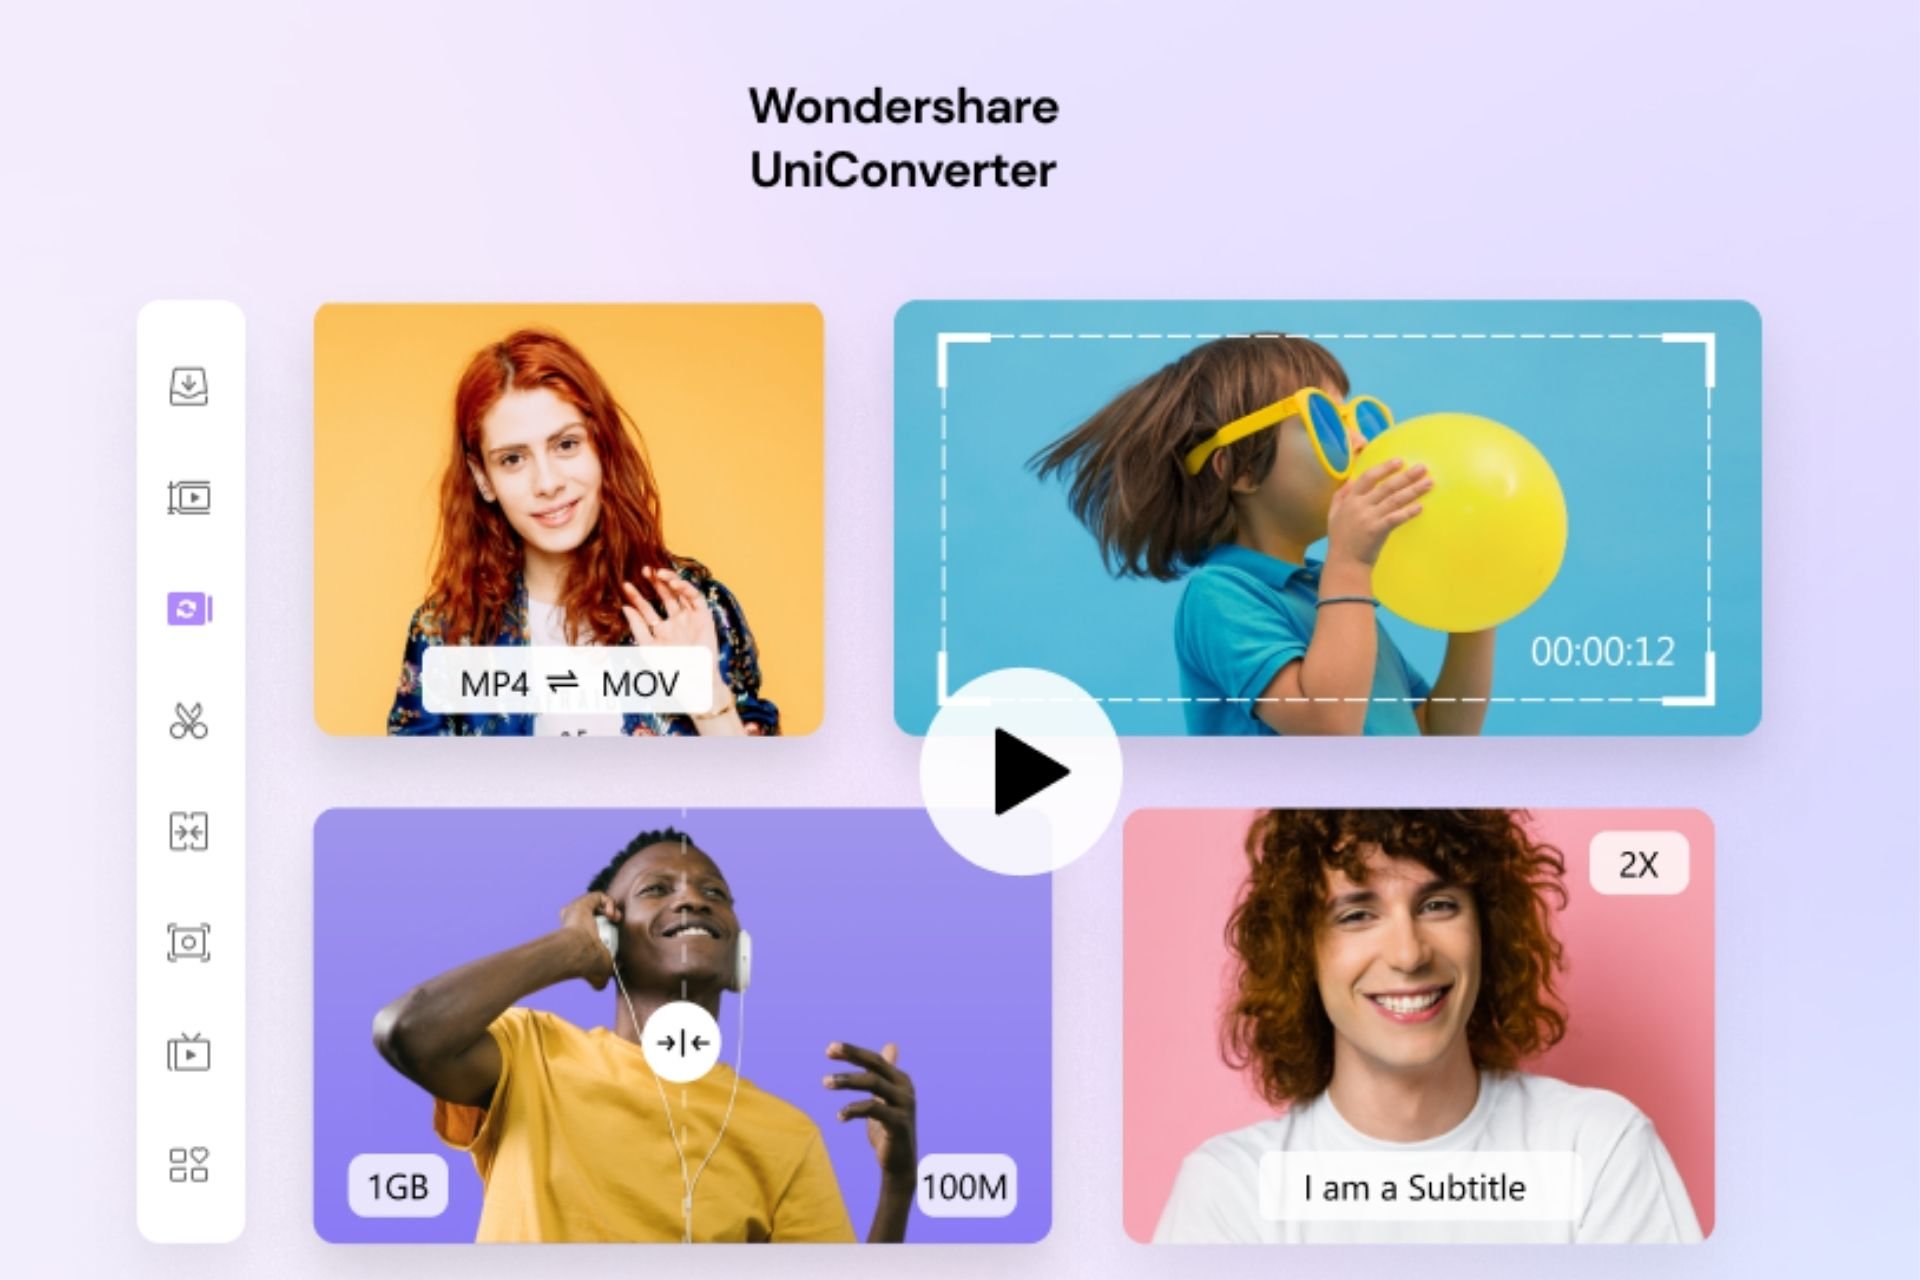 Wondershare Uniconverter release